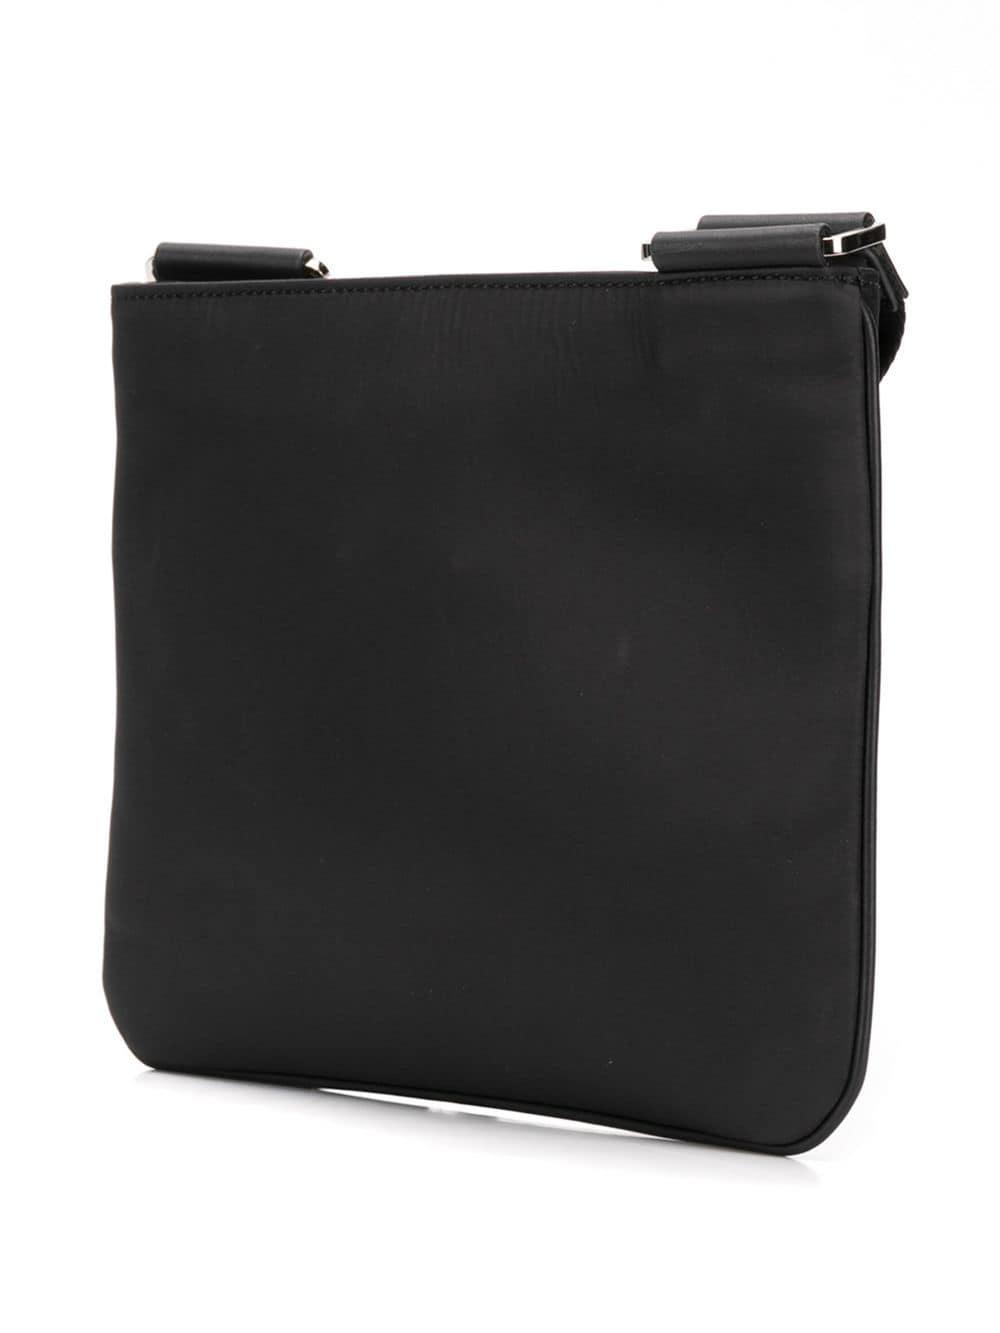 Philipp Plein Cotton Branded Shoulder Bag in Black for Men - Lyst